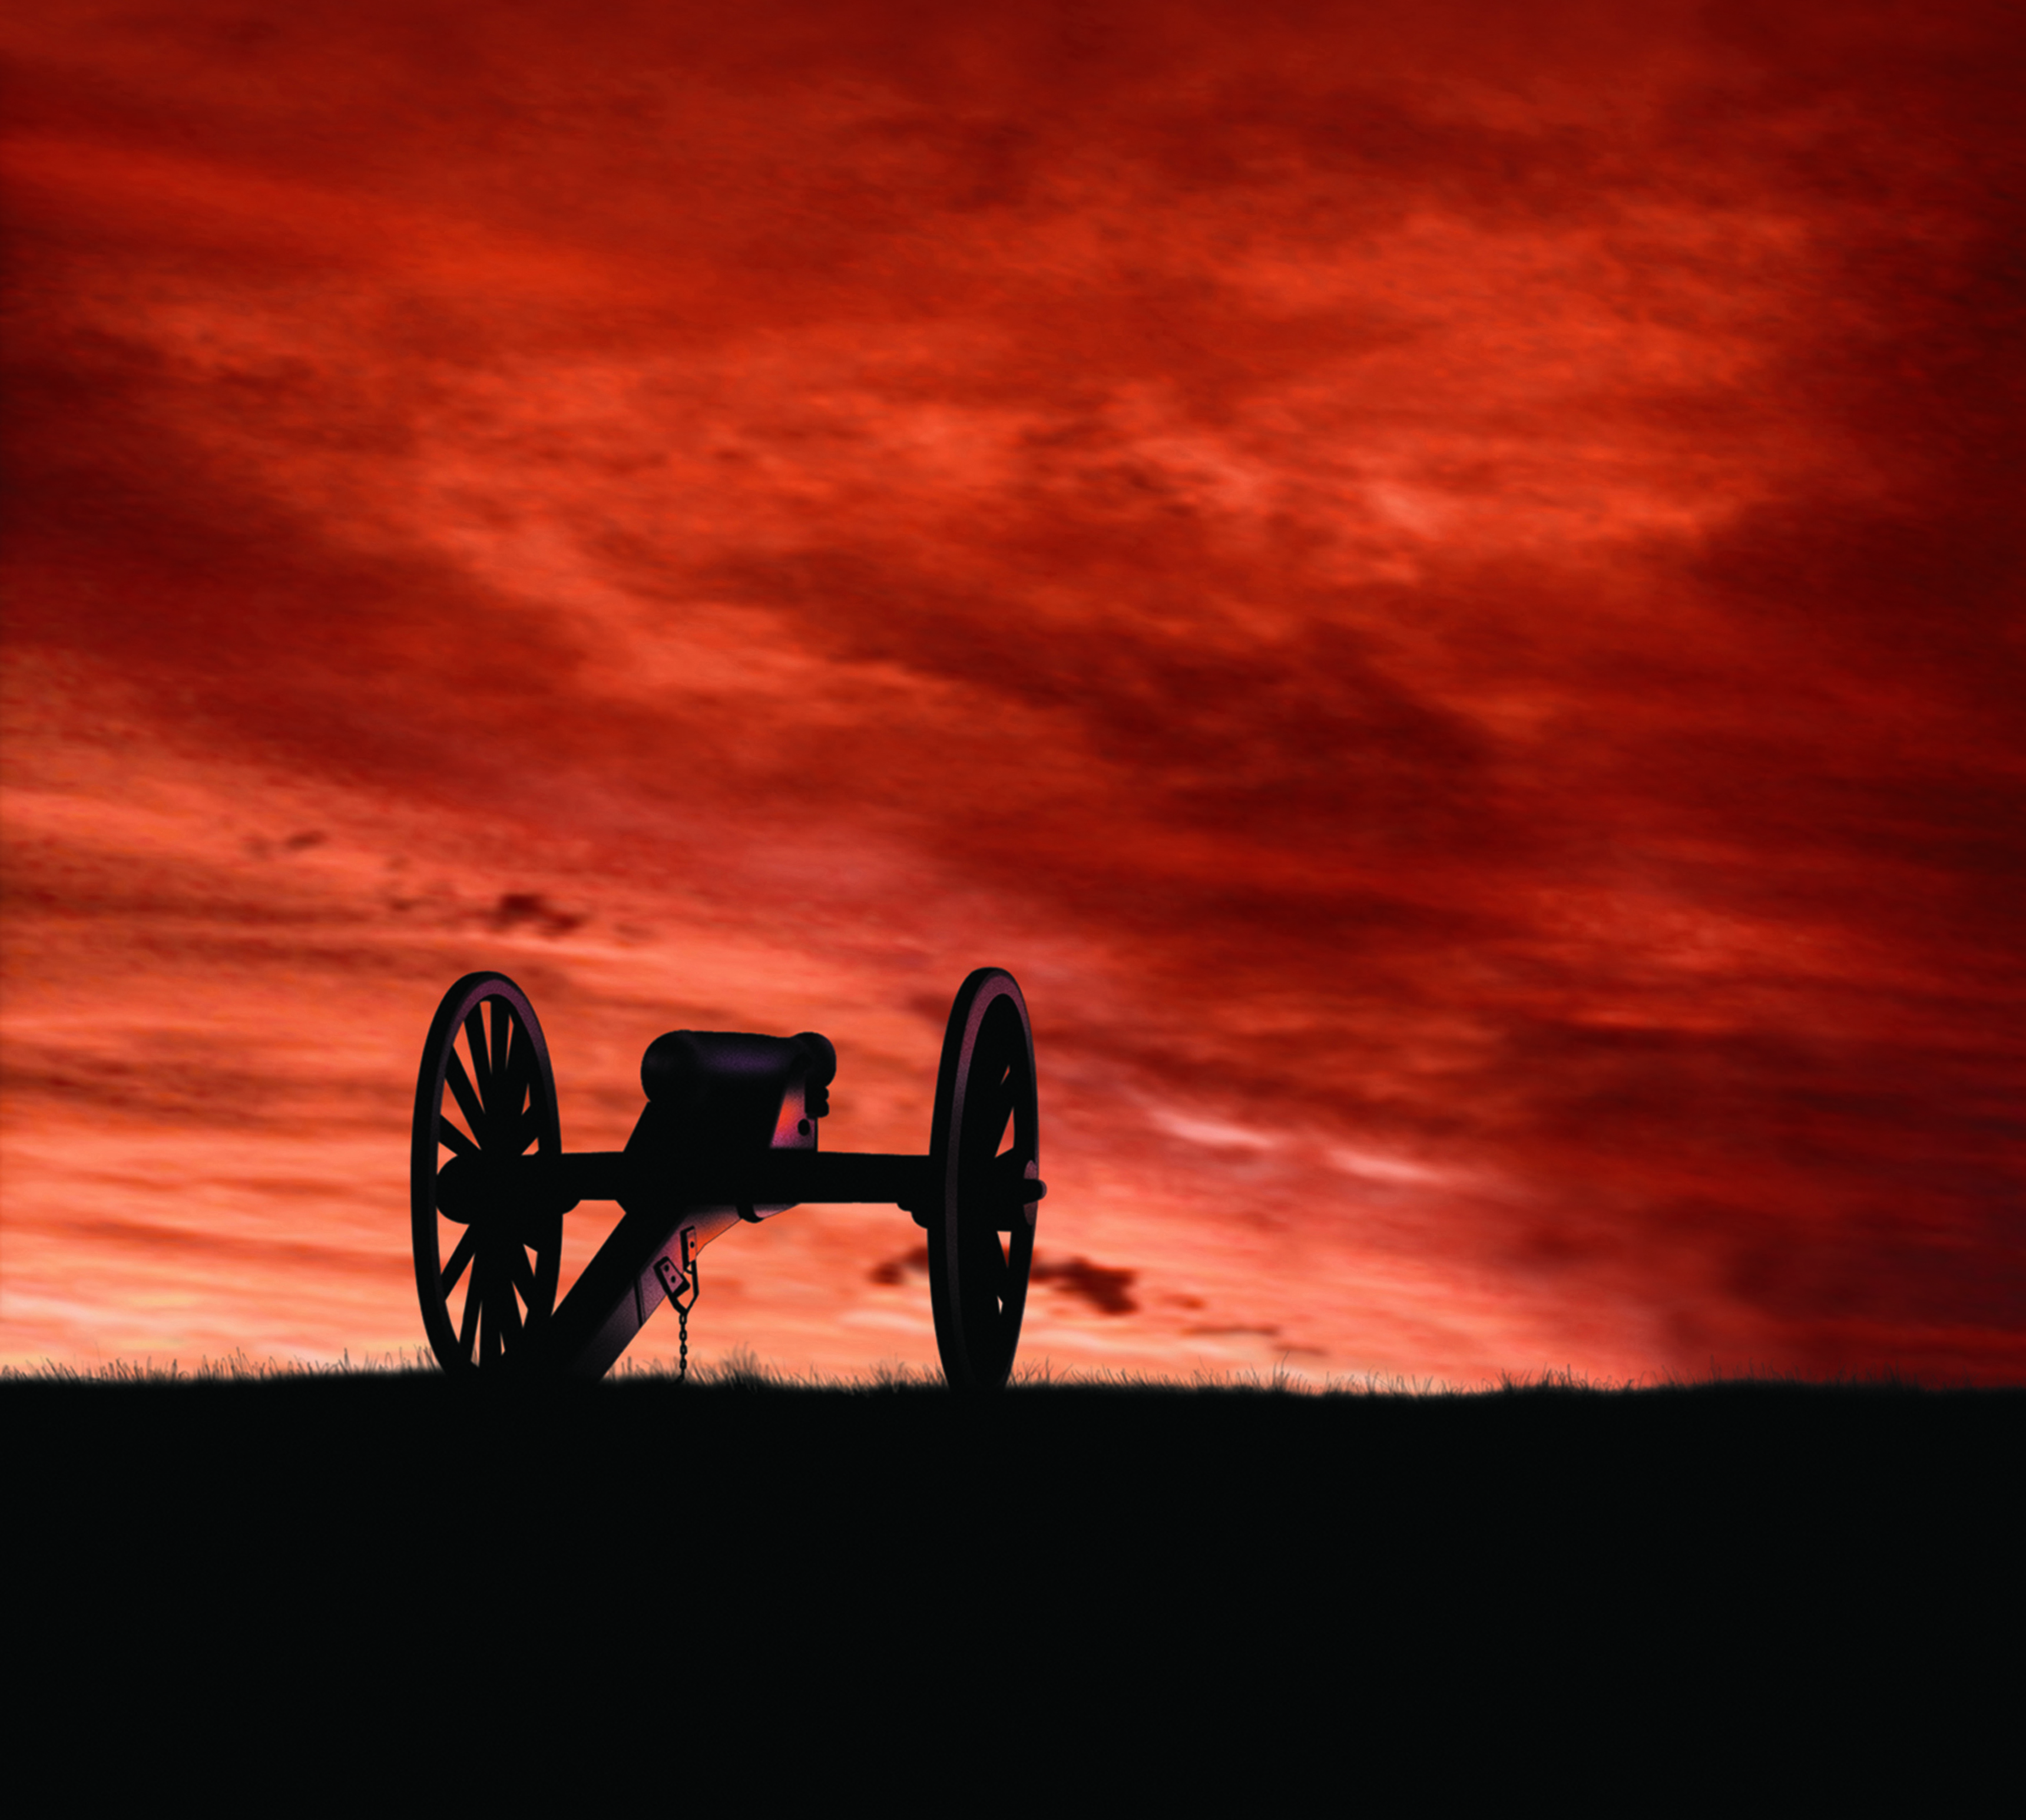 Civil War cannon as seen in Ken Burns documentary "Civil war."